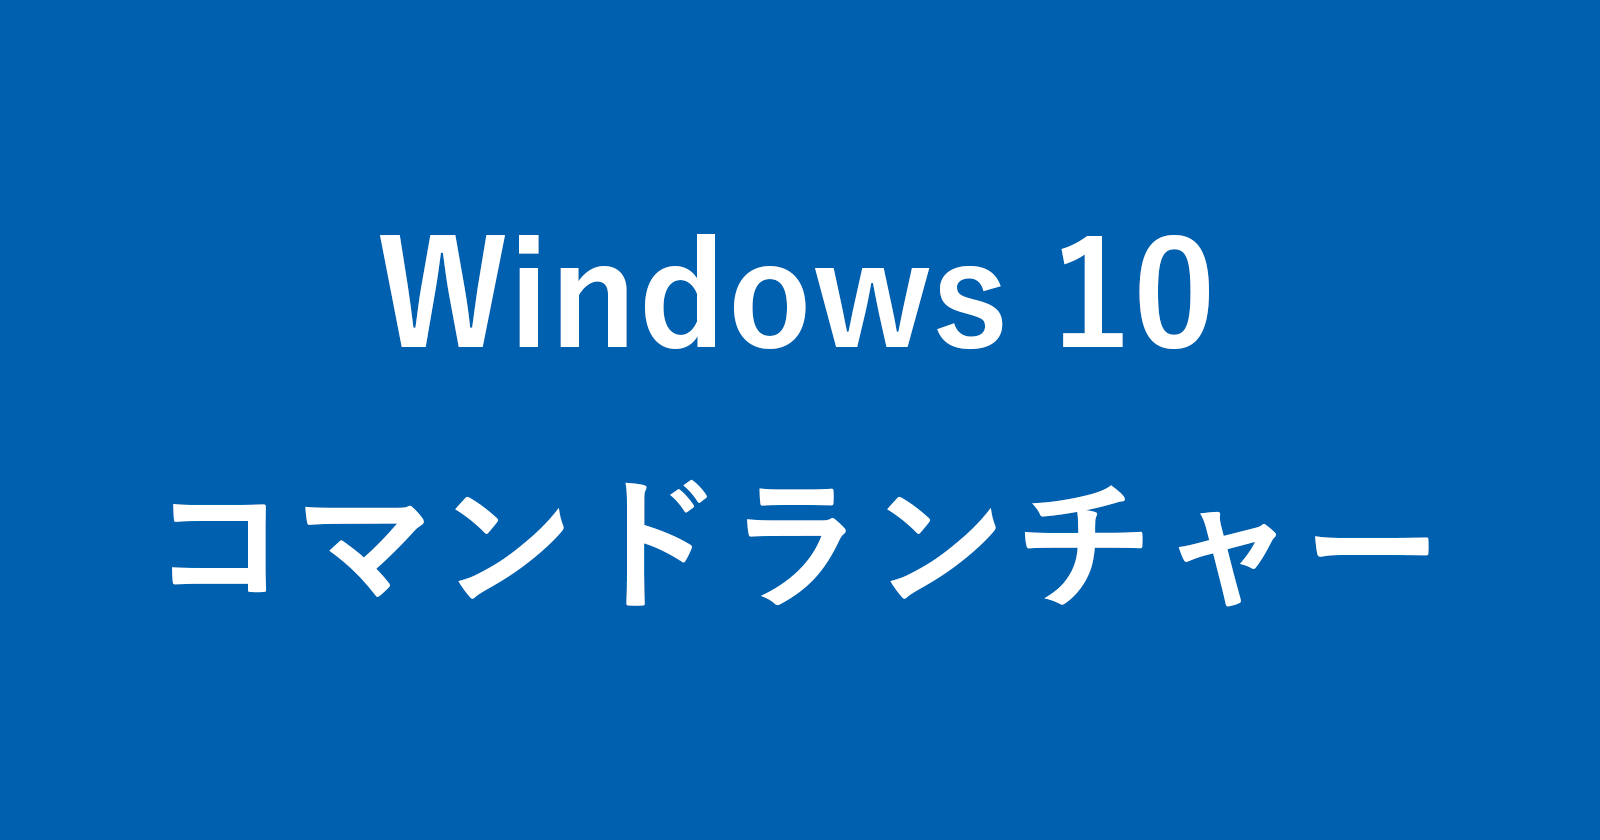 windows 10 command run